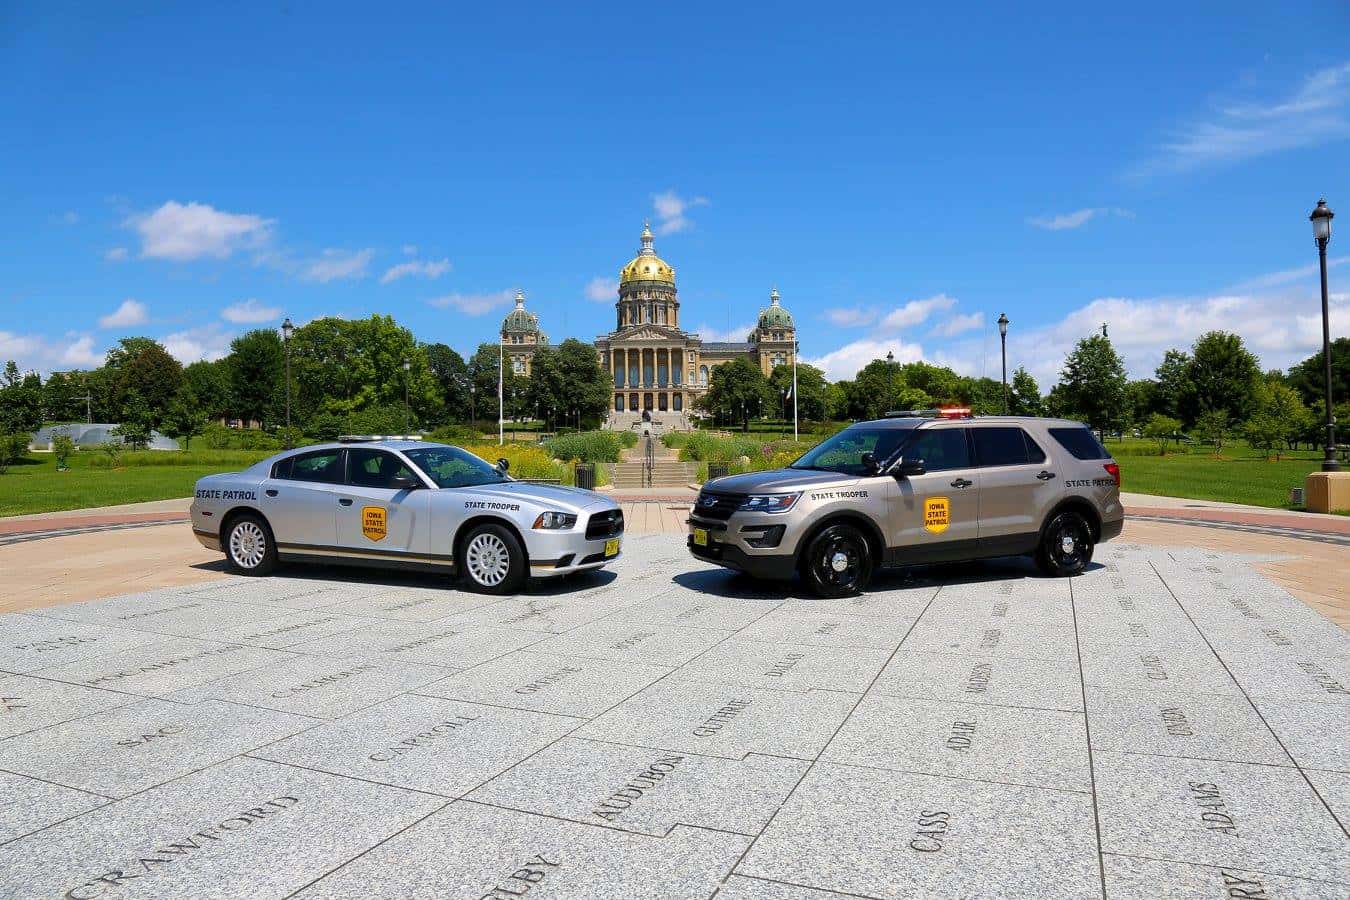 Iowa State patrol